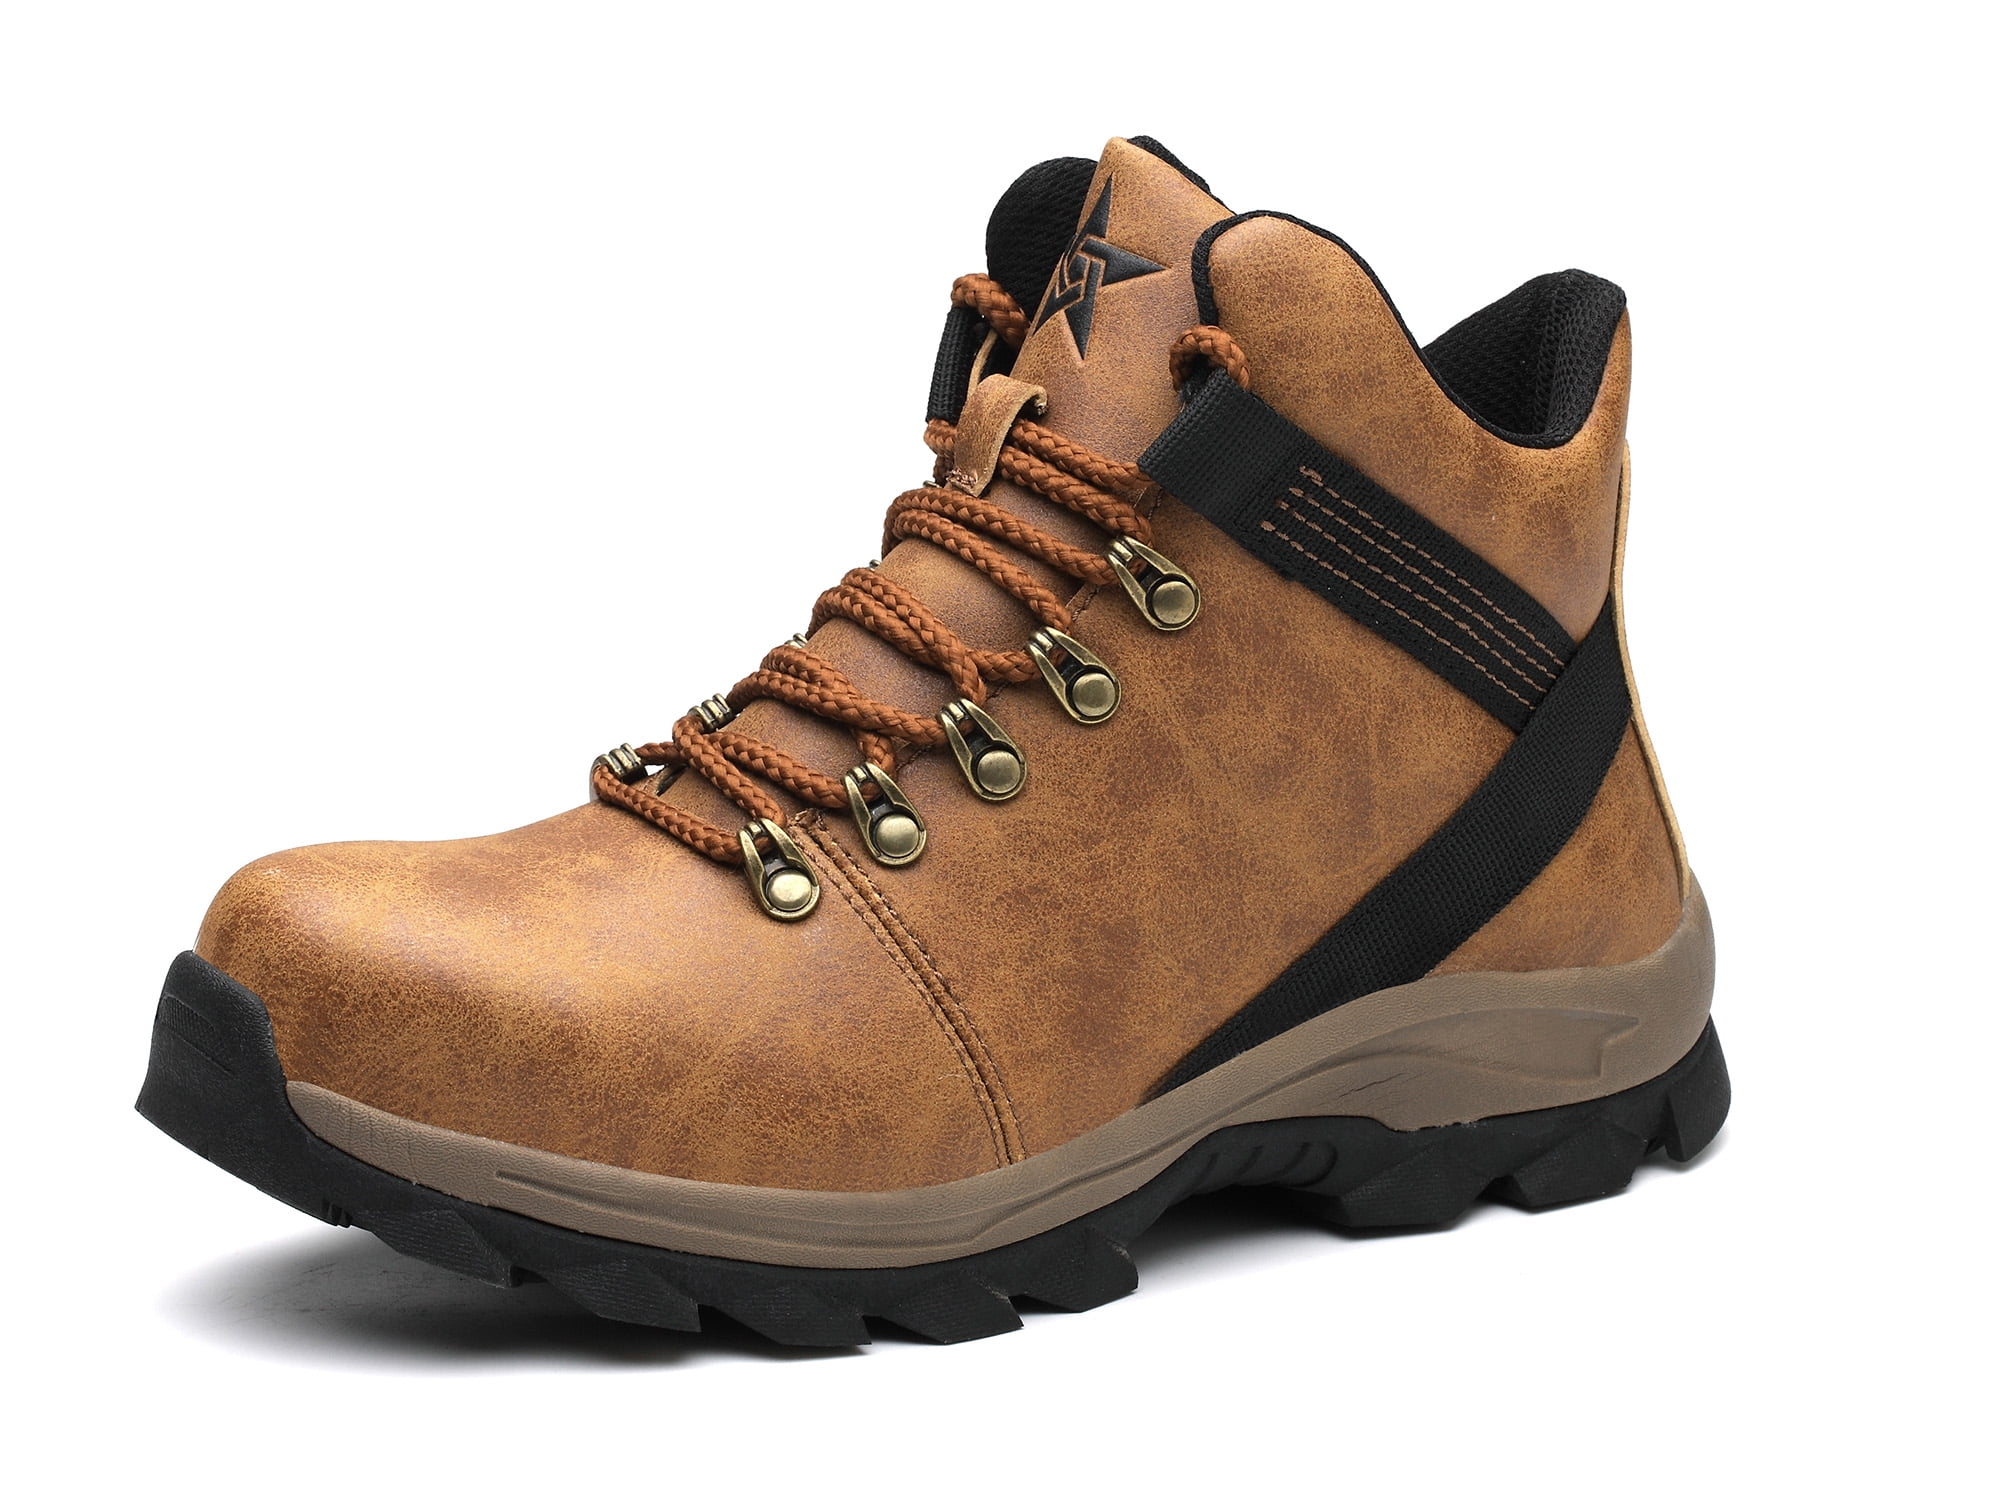 Mens Safety Shoes Steel Toe Work Boots Indestructible Sport Non-Slip Light Hiker 